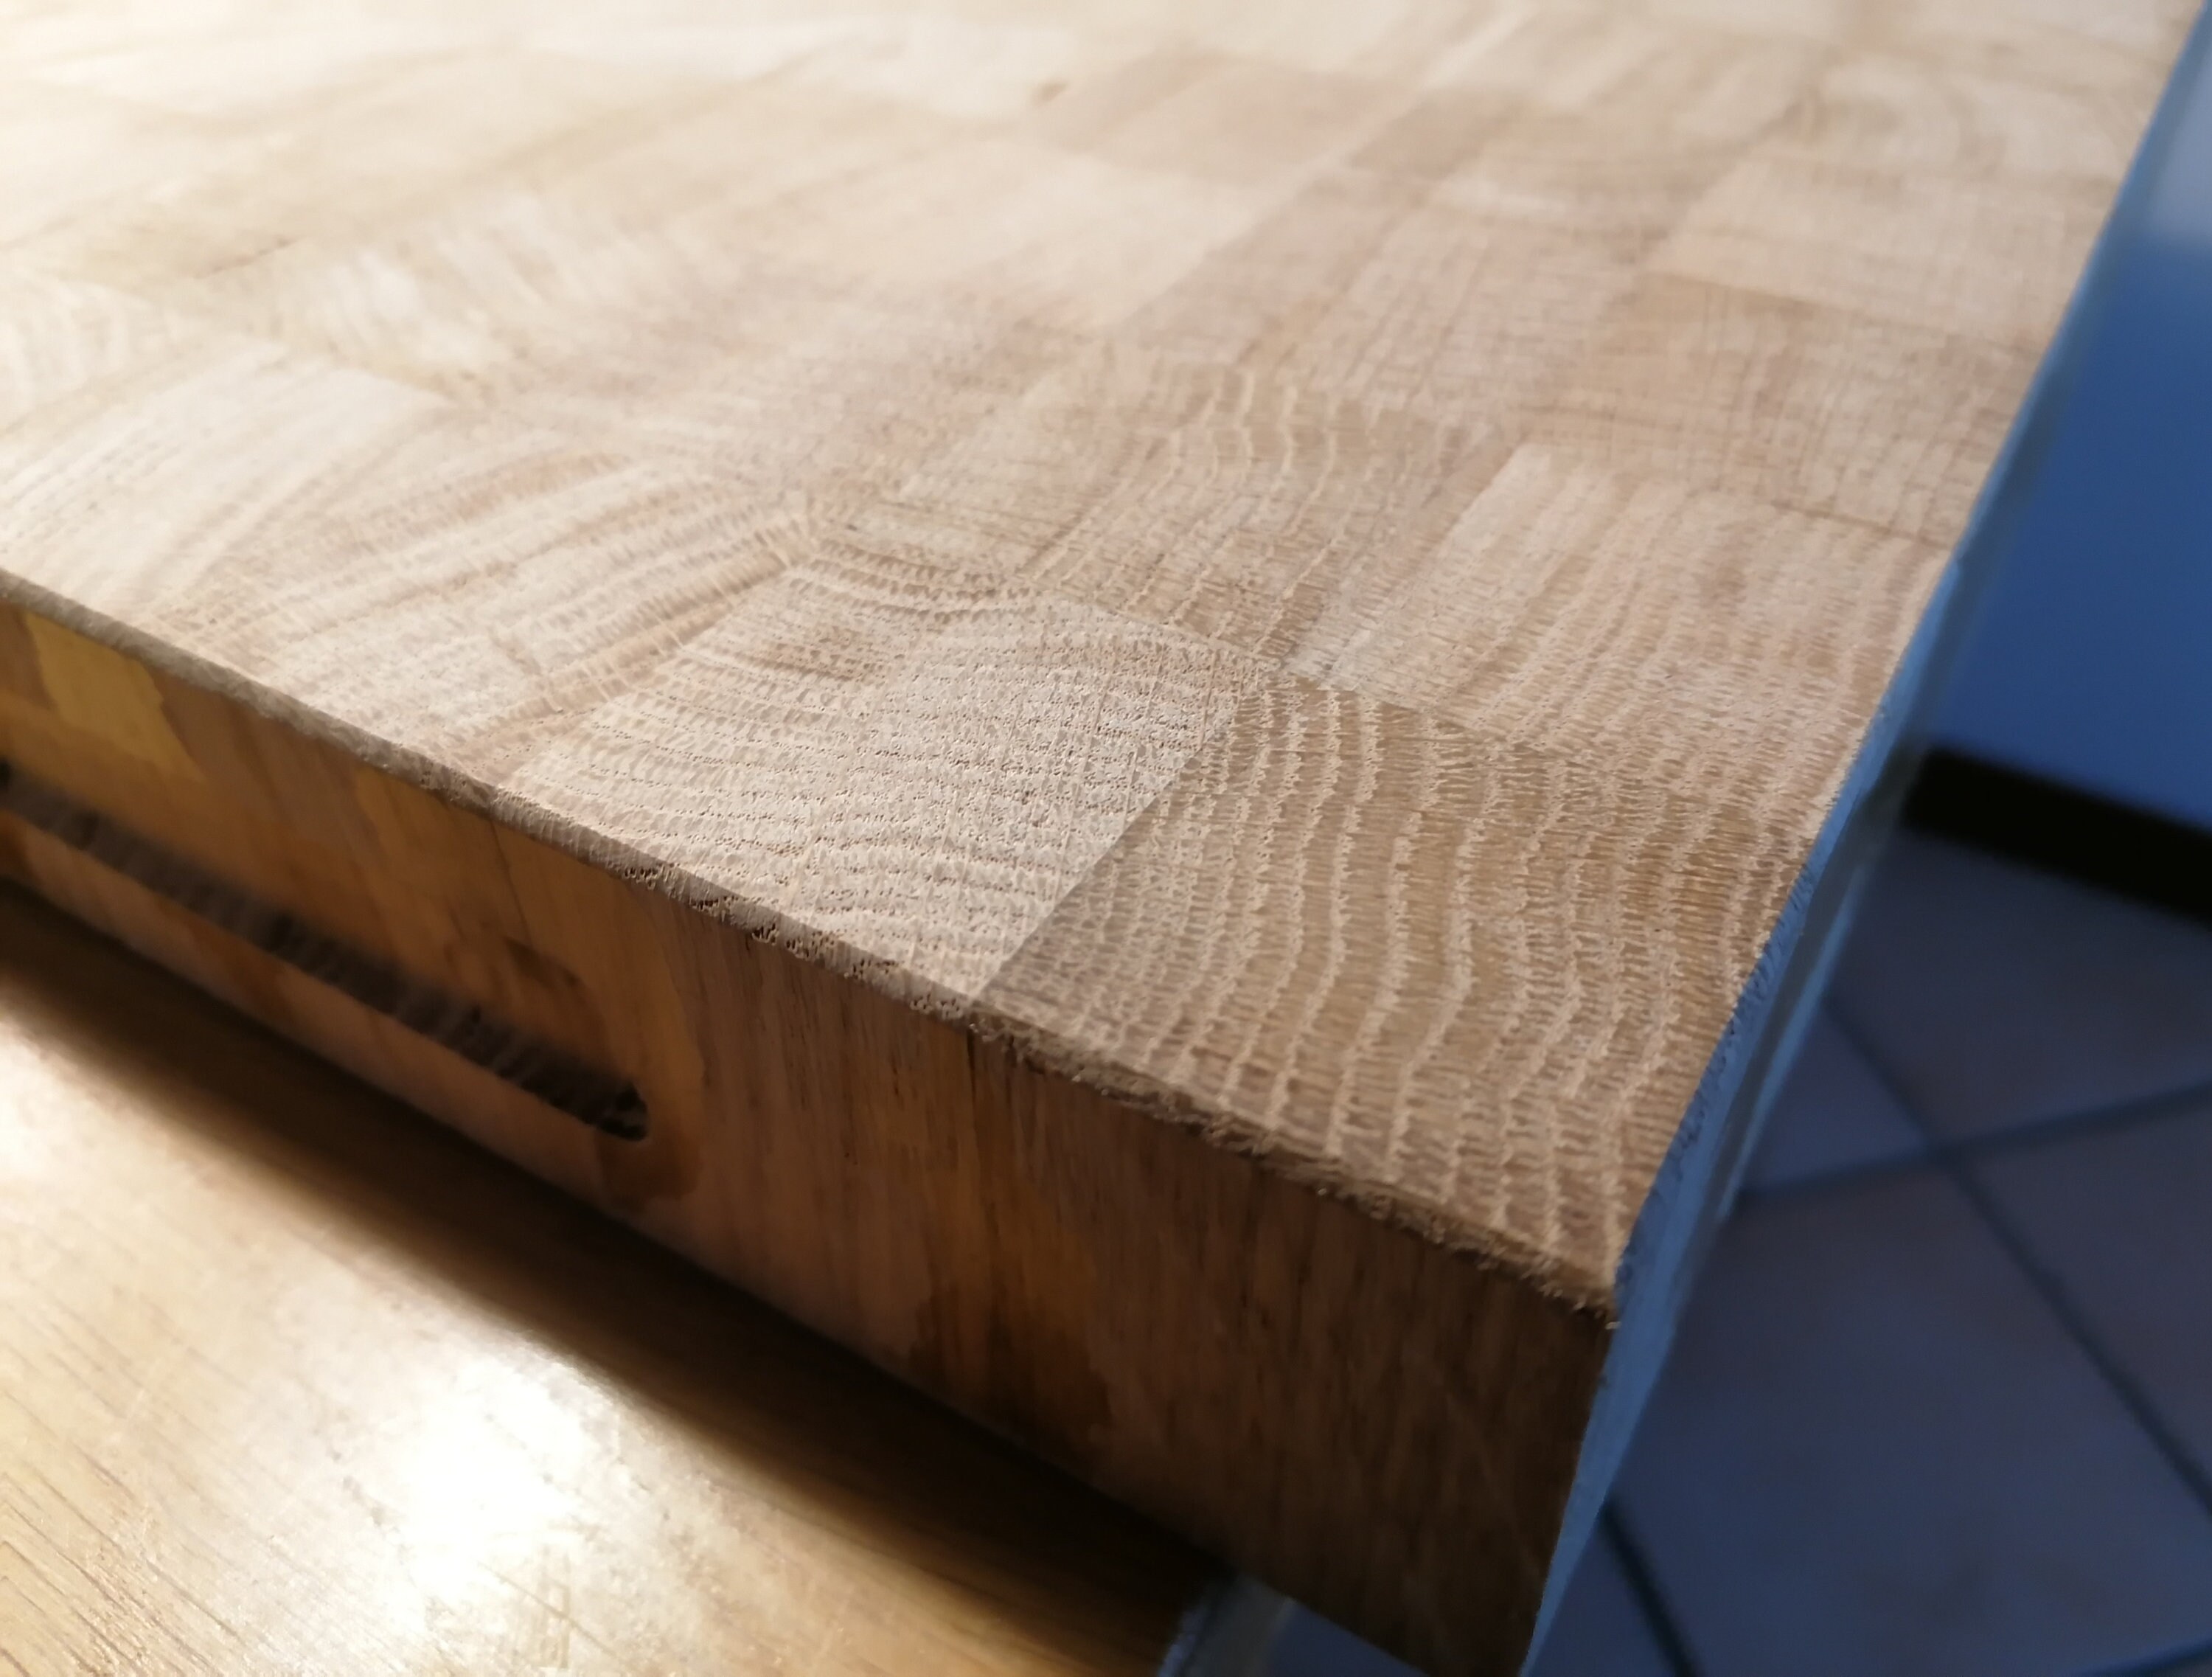 Tagliere da cucina in legno - My Cooking Box